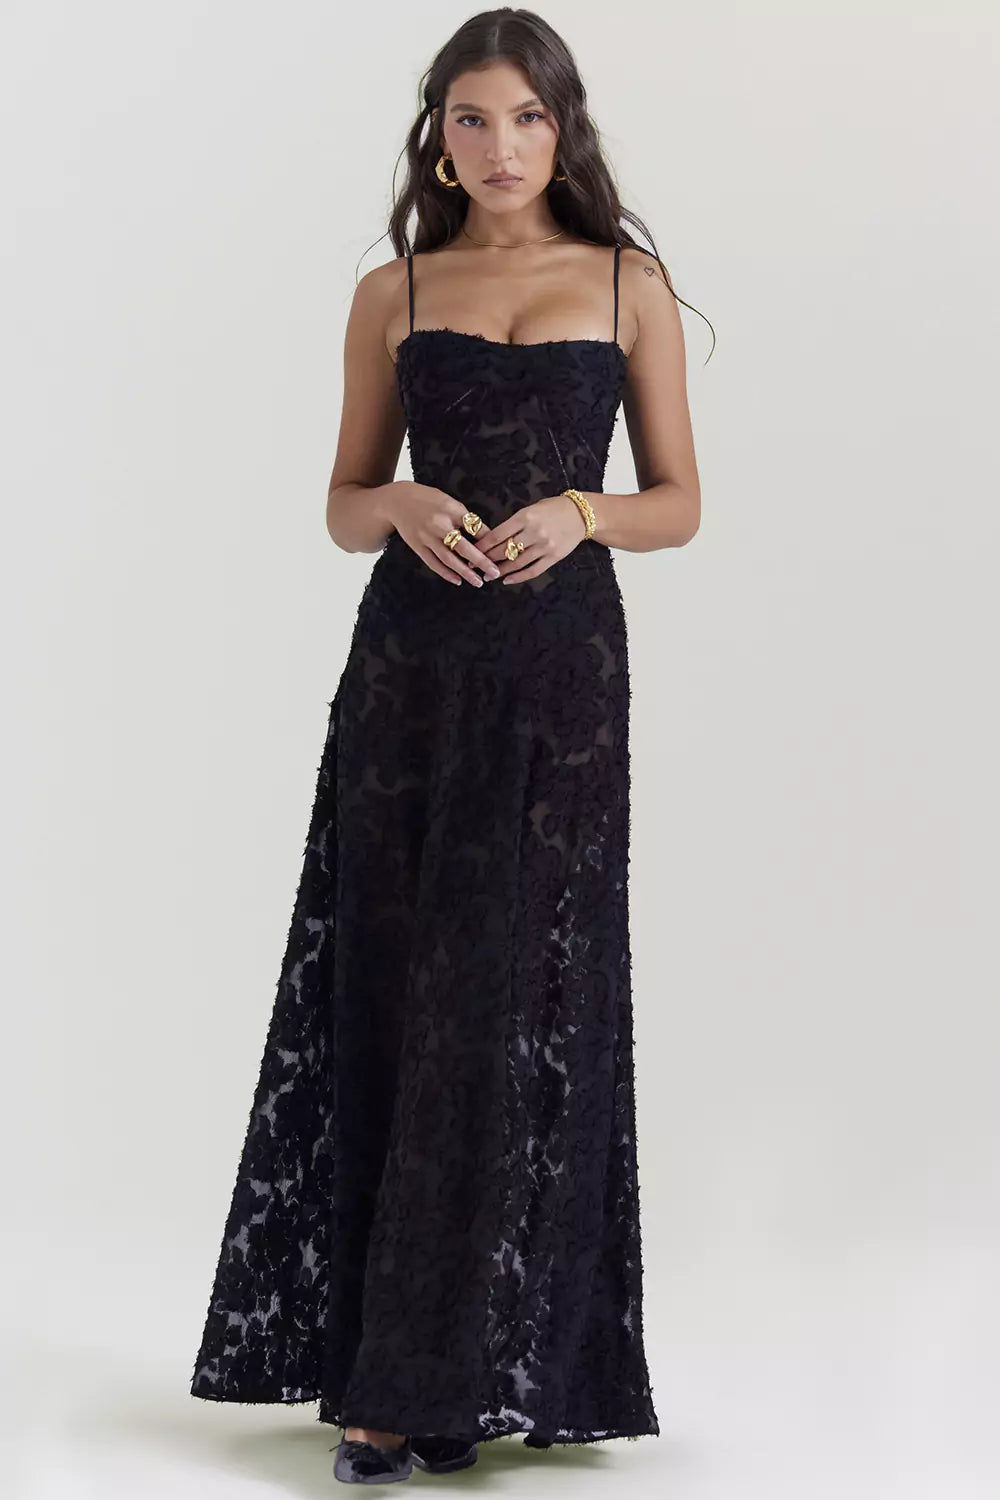 The model is wearing a black lace dress.